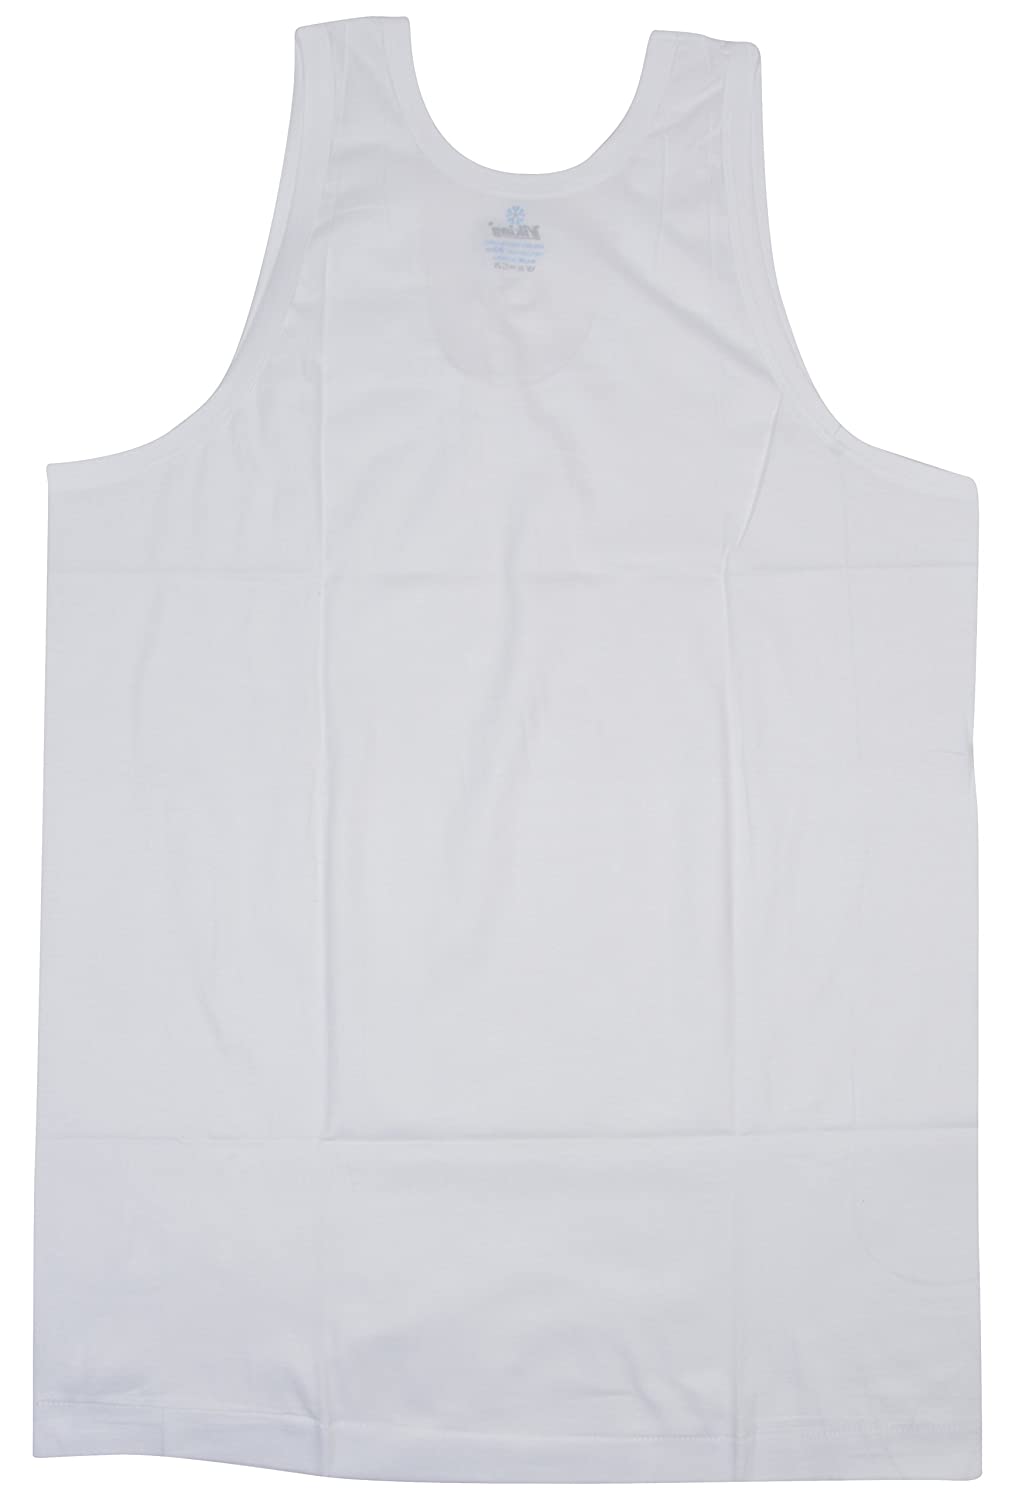 Viking Sleeveless Men's Round Neck White Vests (Pack of 5) - Stilento